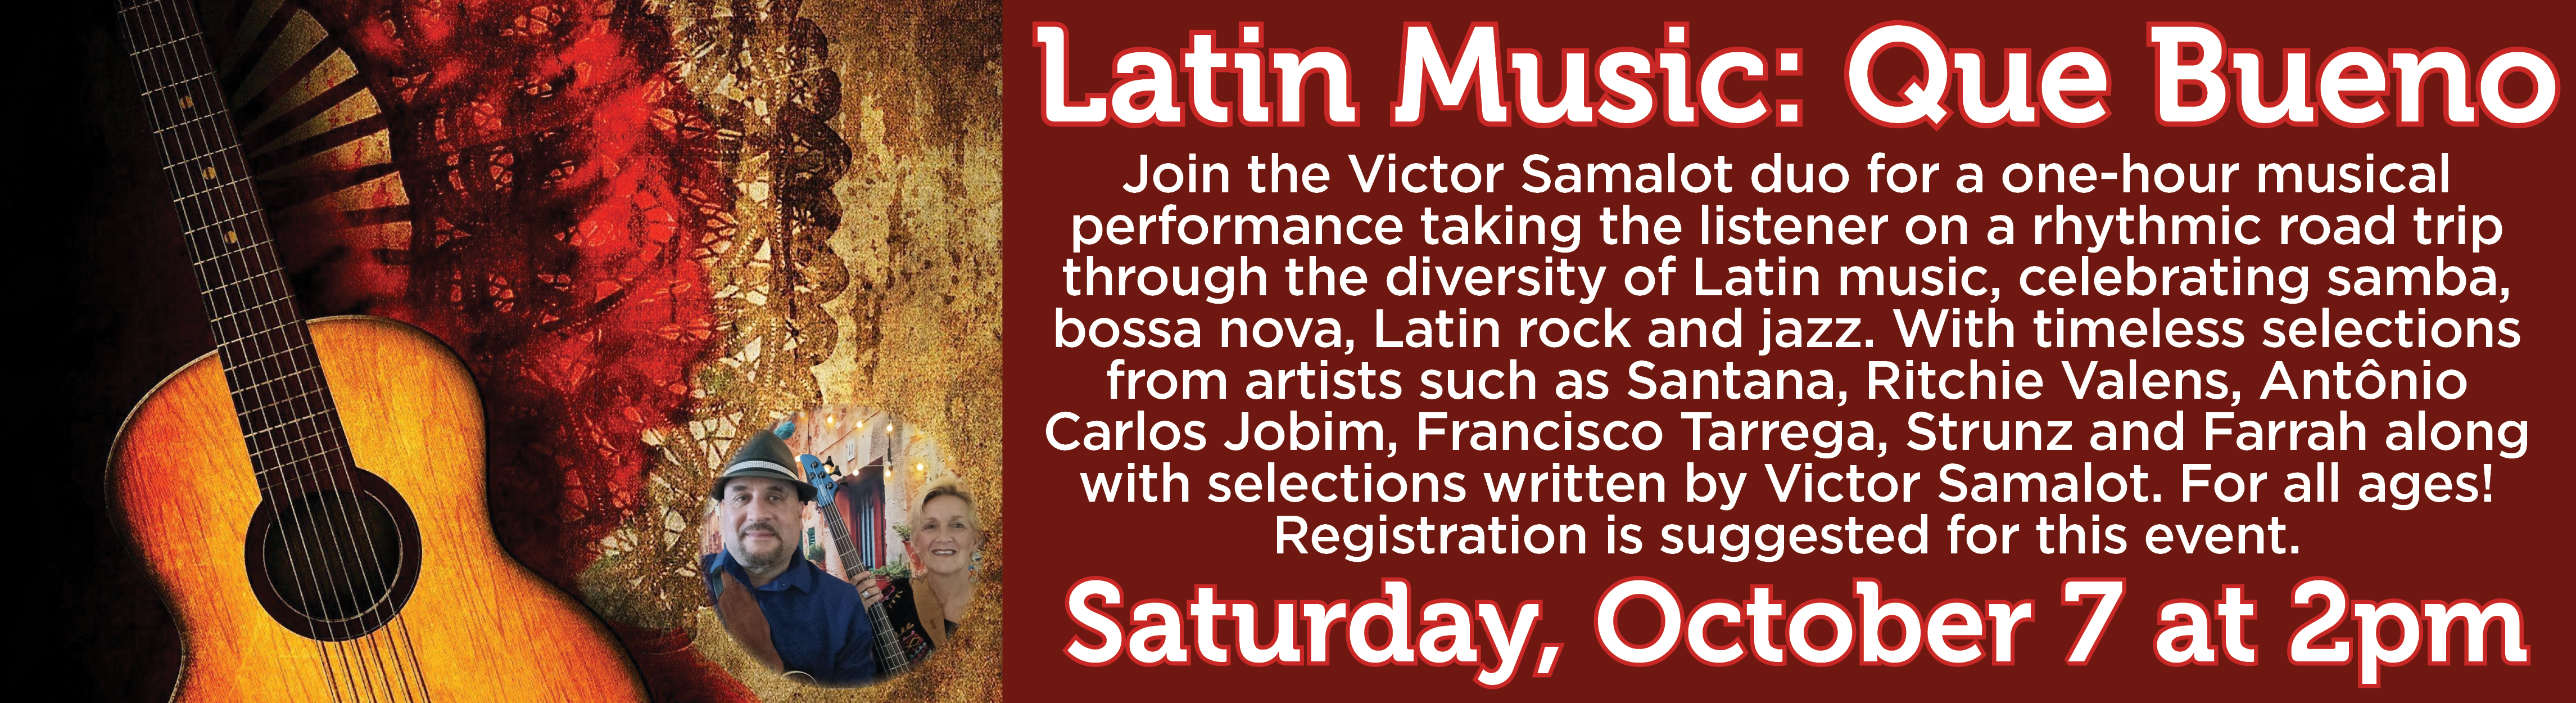 Latin Music: Que Bueno – Hispanic Heritage Month Concert